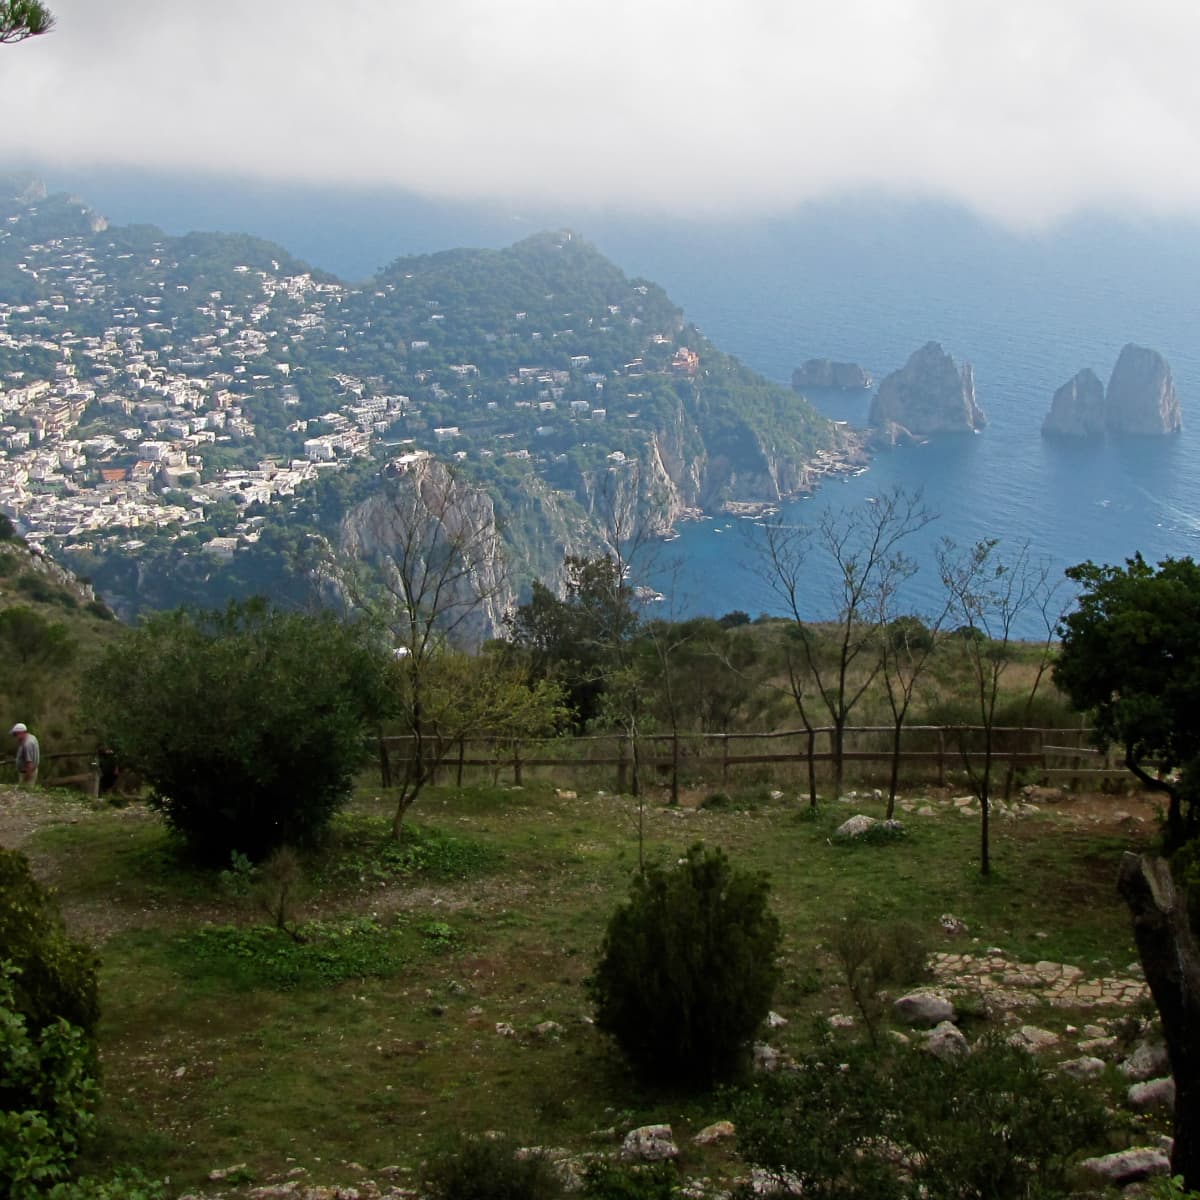 Capri Chair Lift, Capri - Book Tickets & Tours